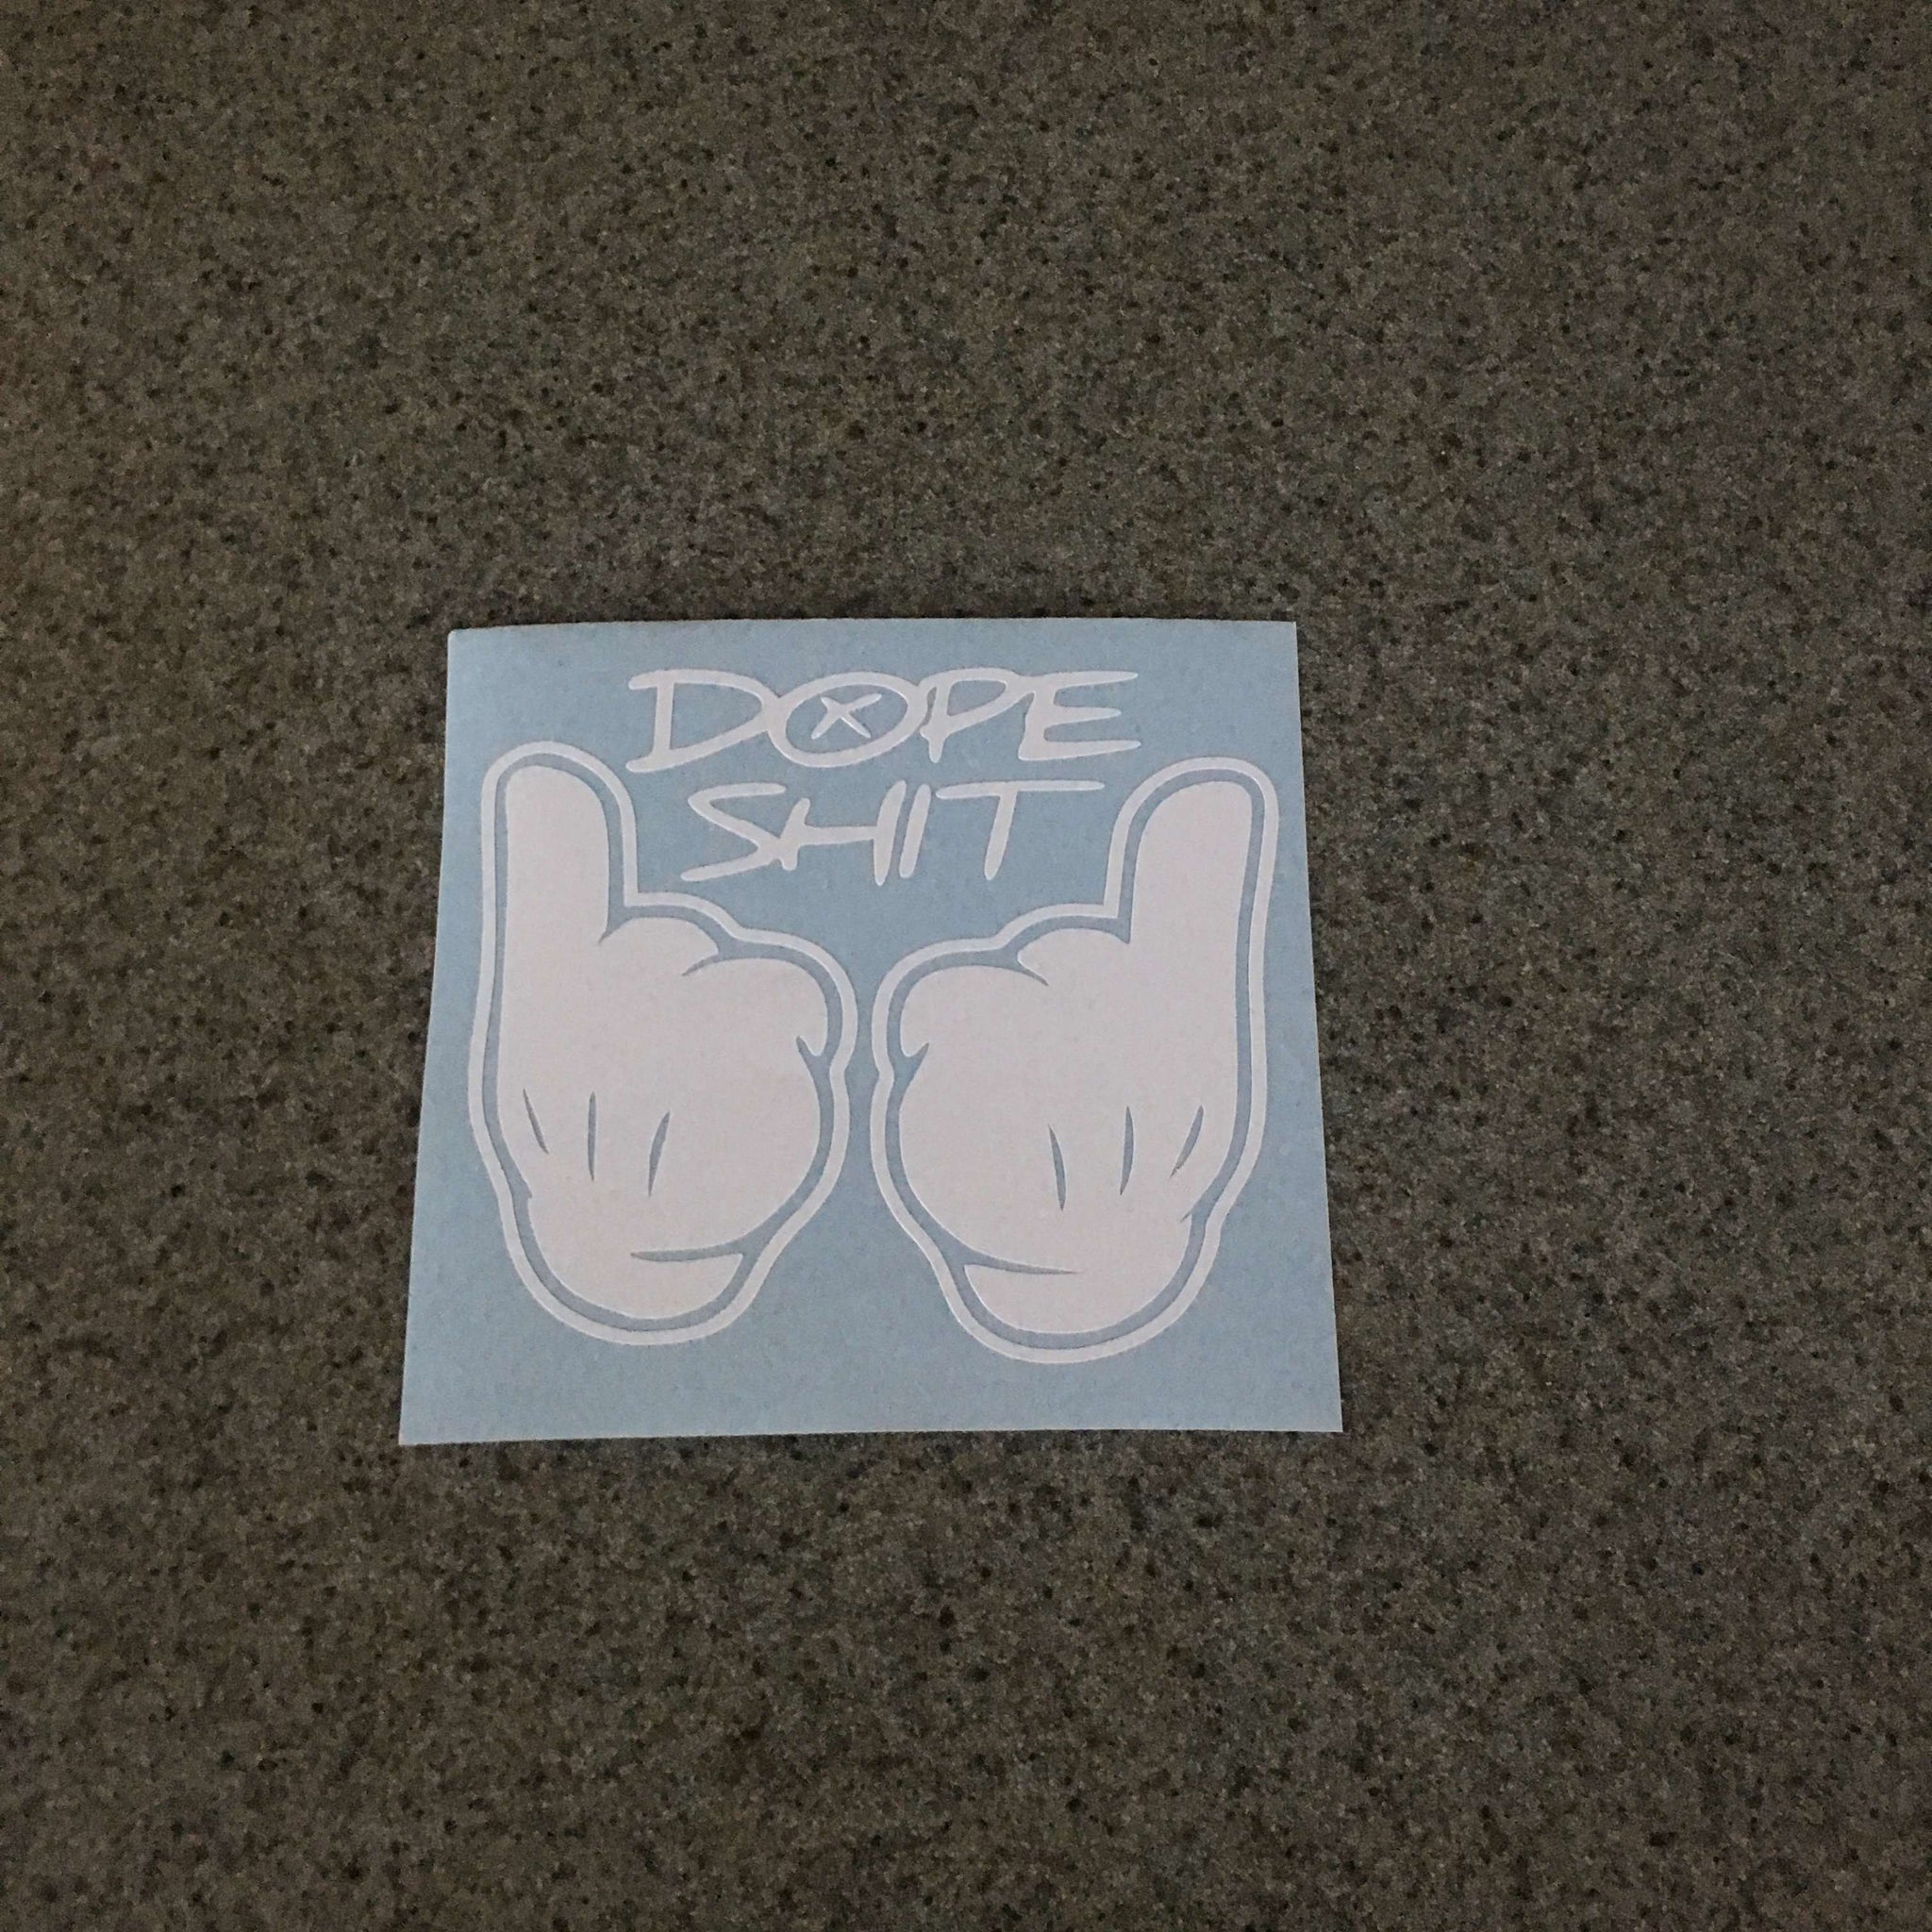 dope hands logo